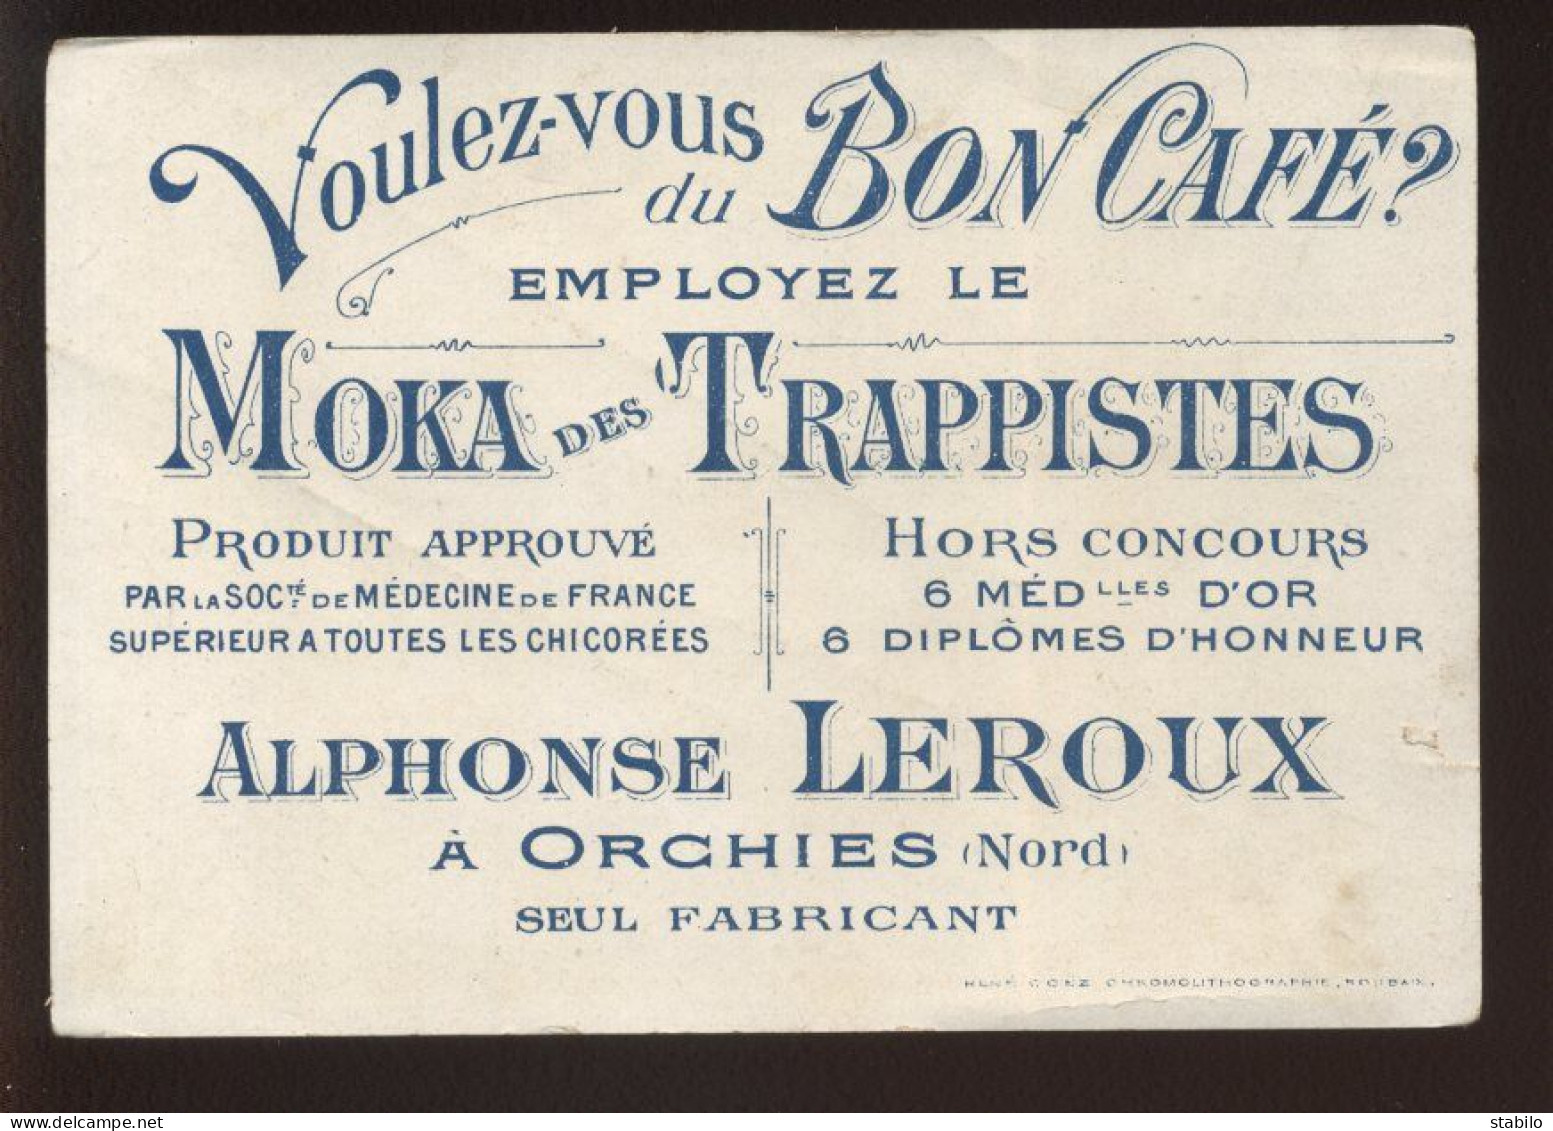 CHROMOS - SCENE DE VIE - CAFE MOKA DES TRAPPISTES, ALPHONSE LEROUX A ORCHIES (NORD) - Tea & Coffee Manufacturers